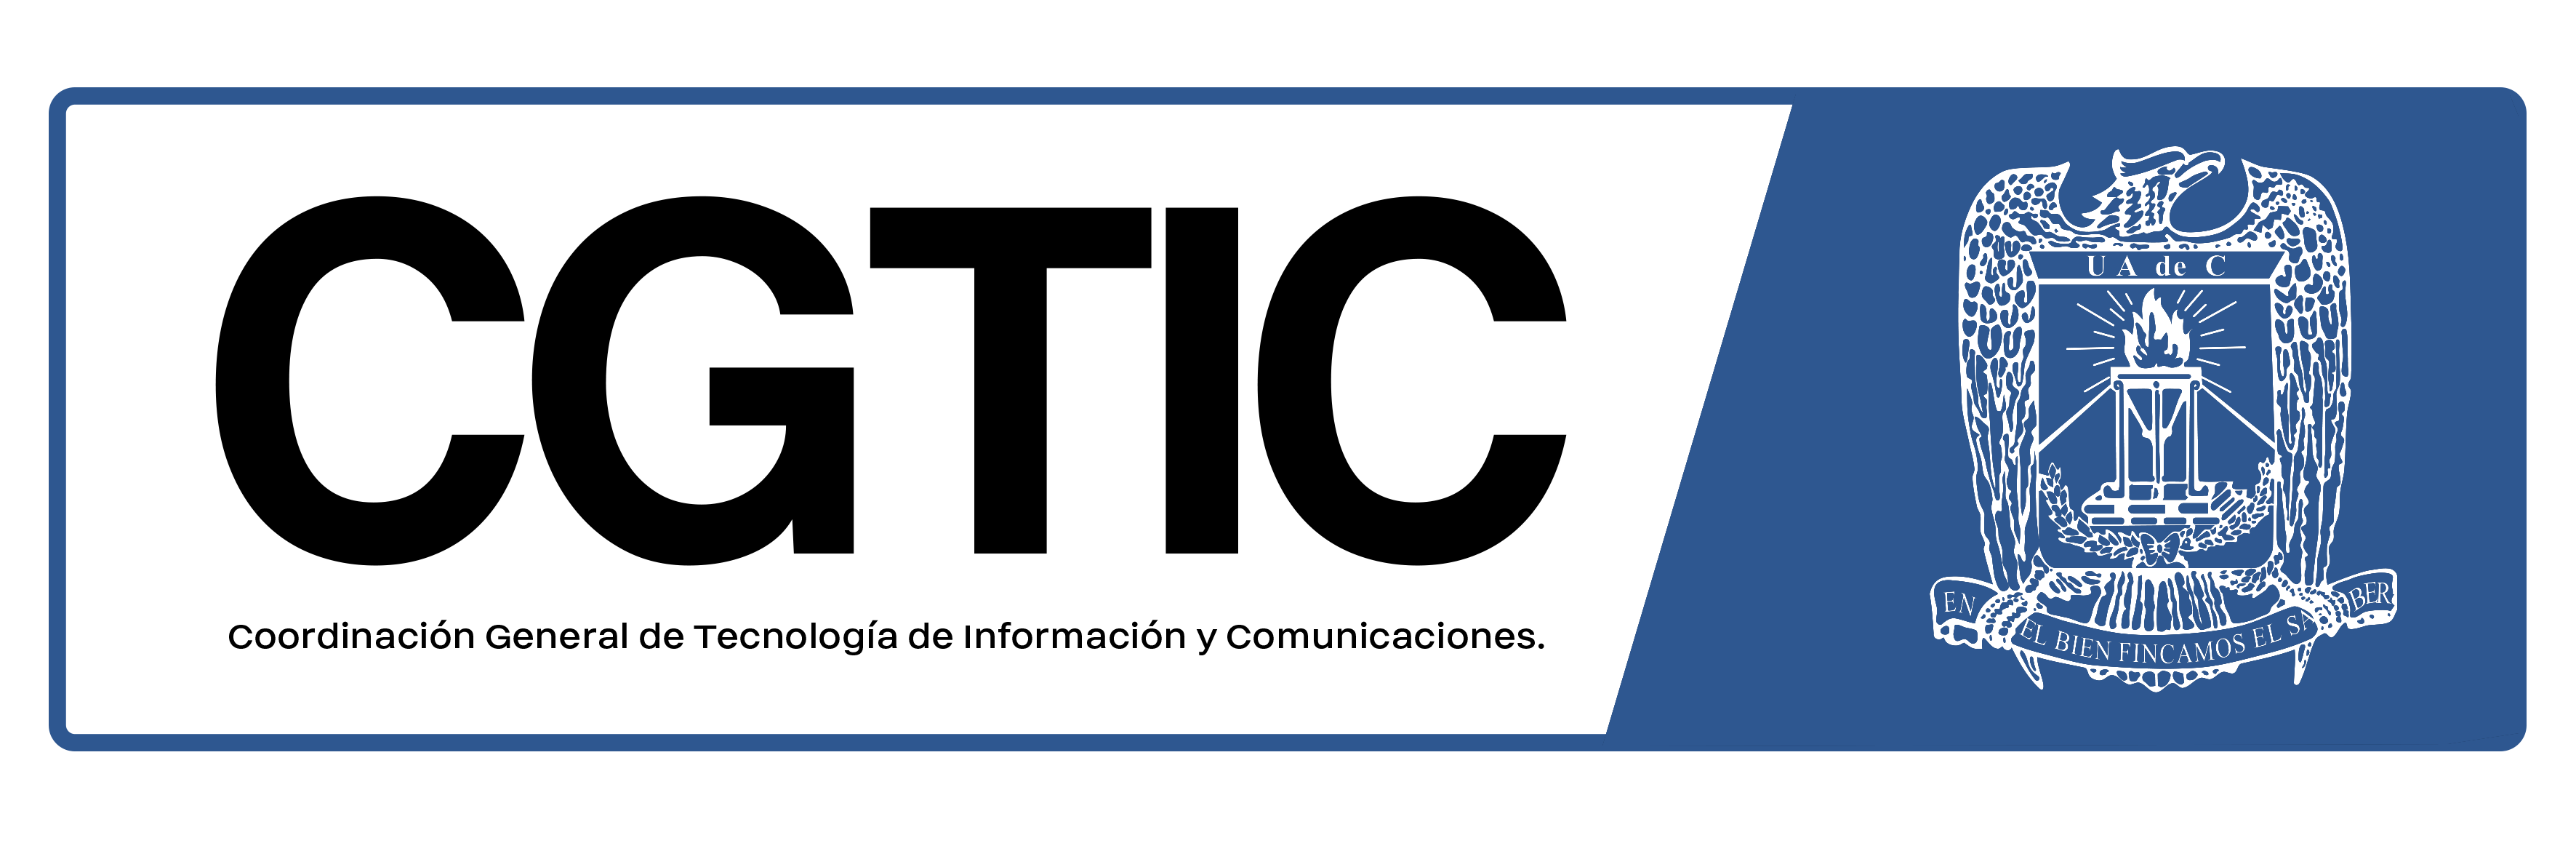 2018-04-16 CGTIC logo